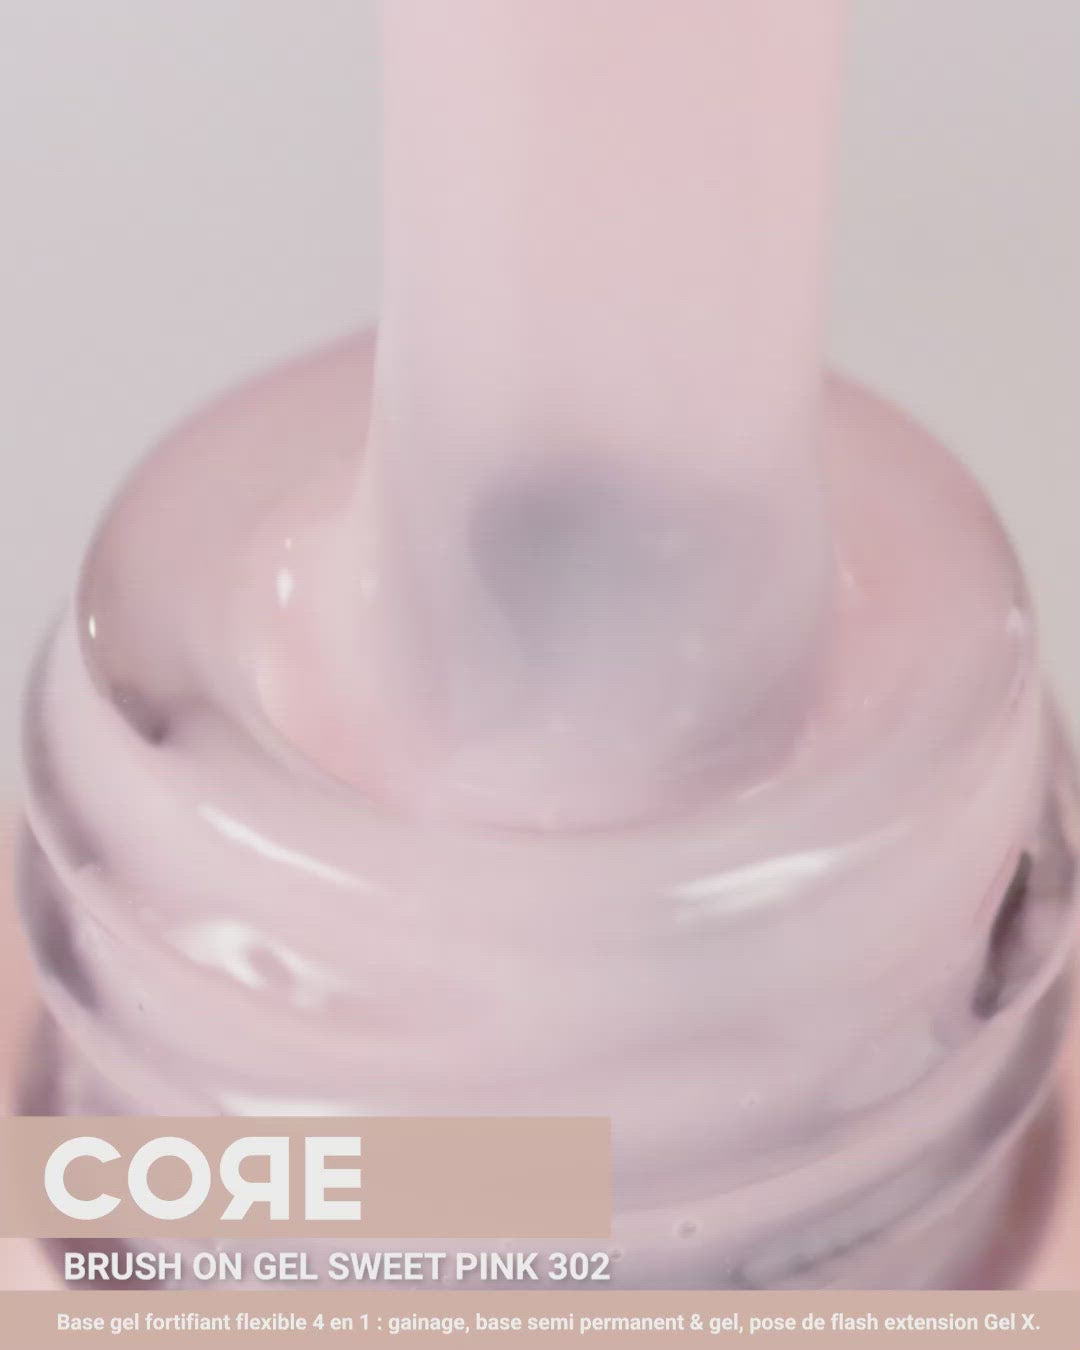 BOG (brush on gel) - Sweet Pink